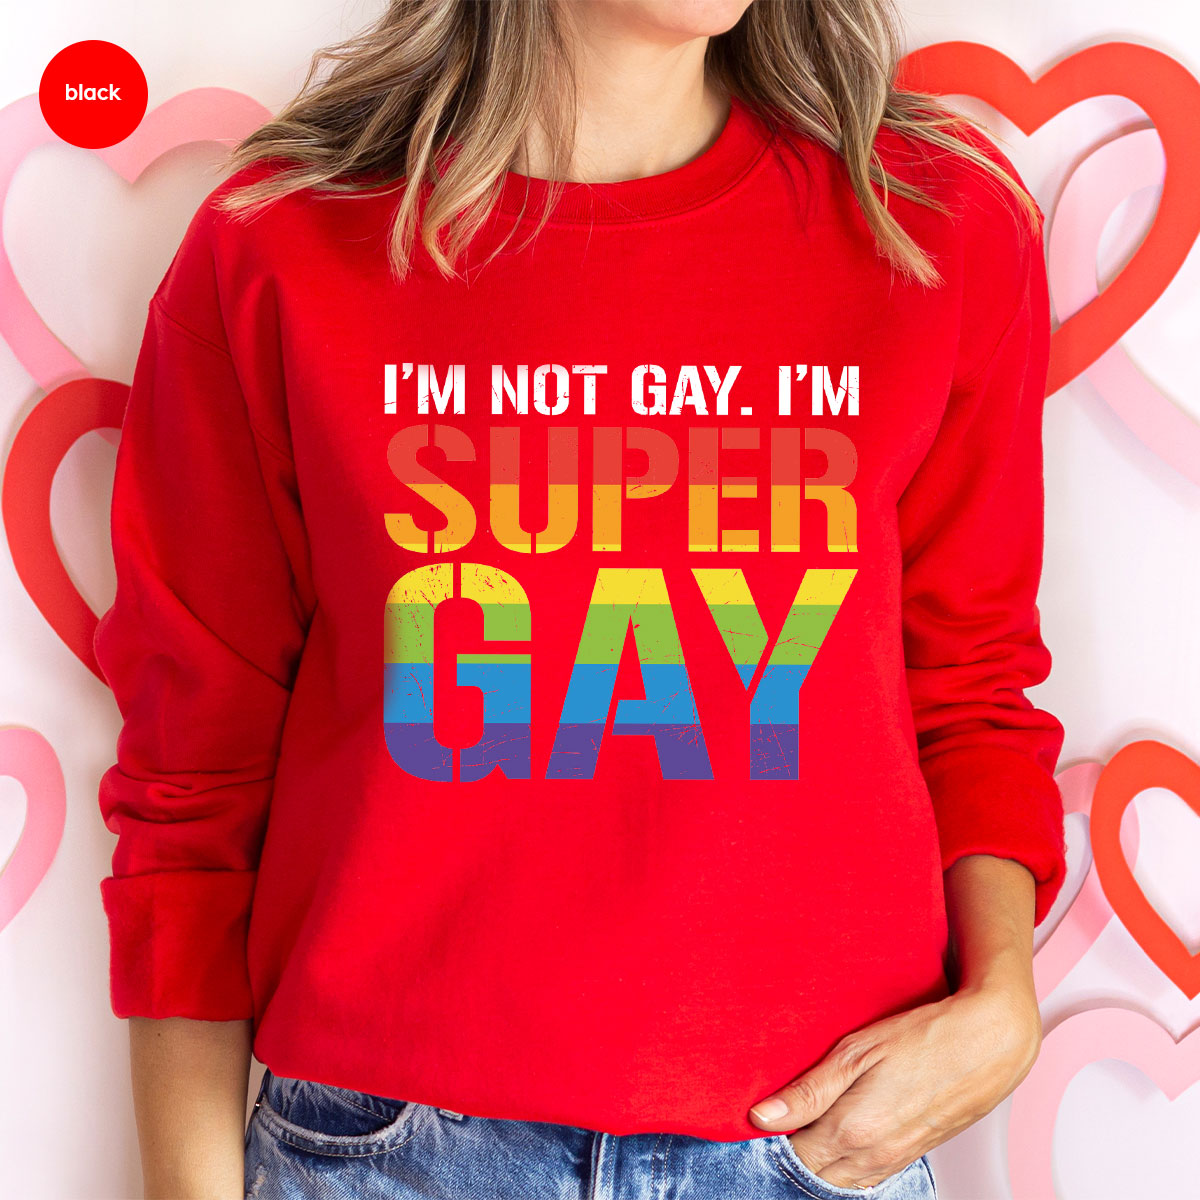 Super Gay Shirt, LGBT Power T-Shirt, Super Gay LGBT Tee